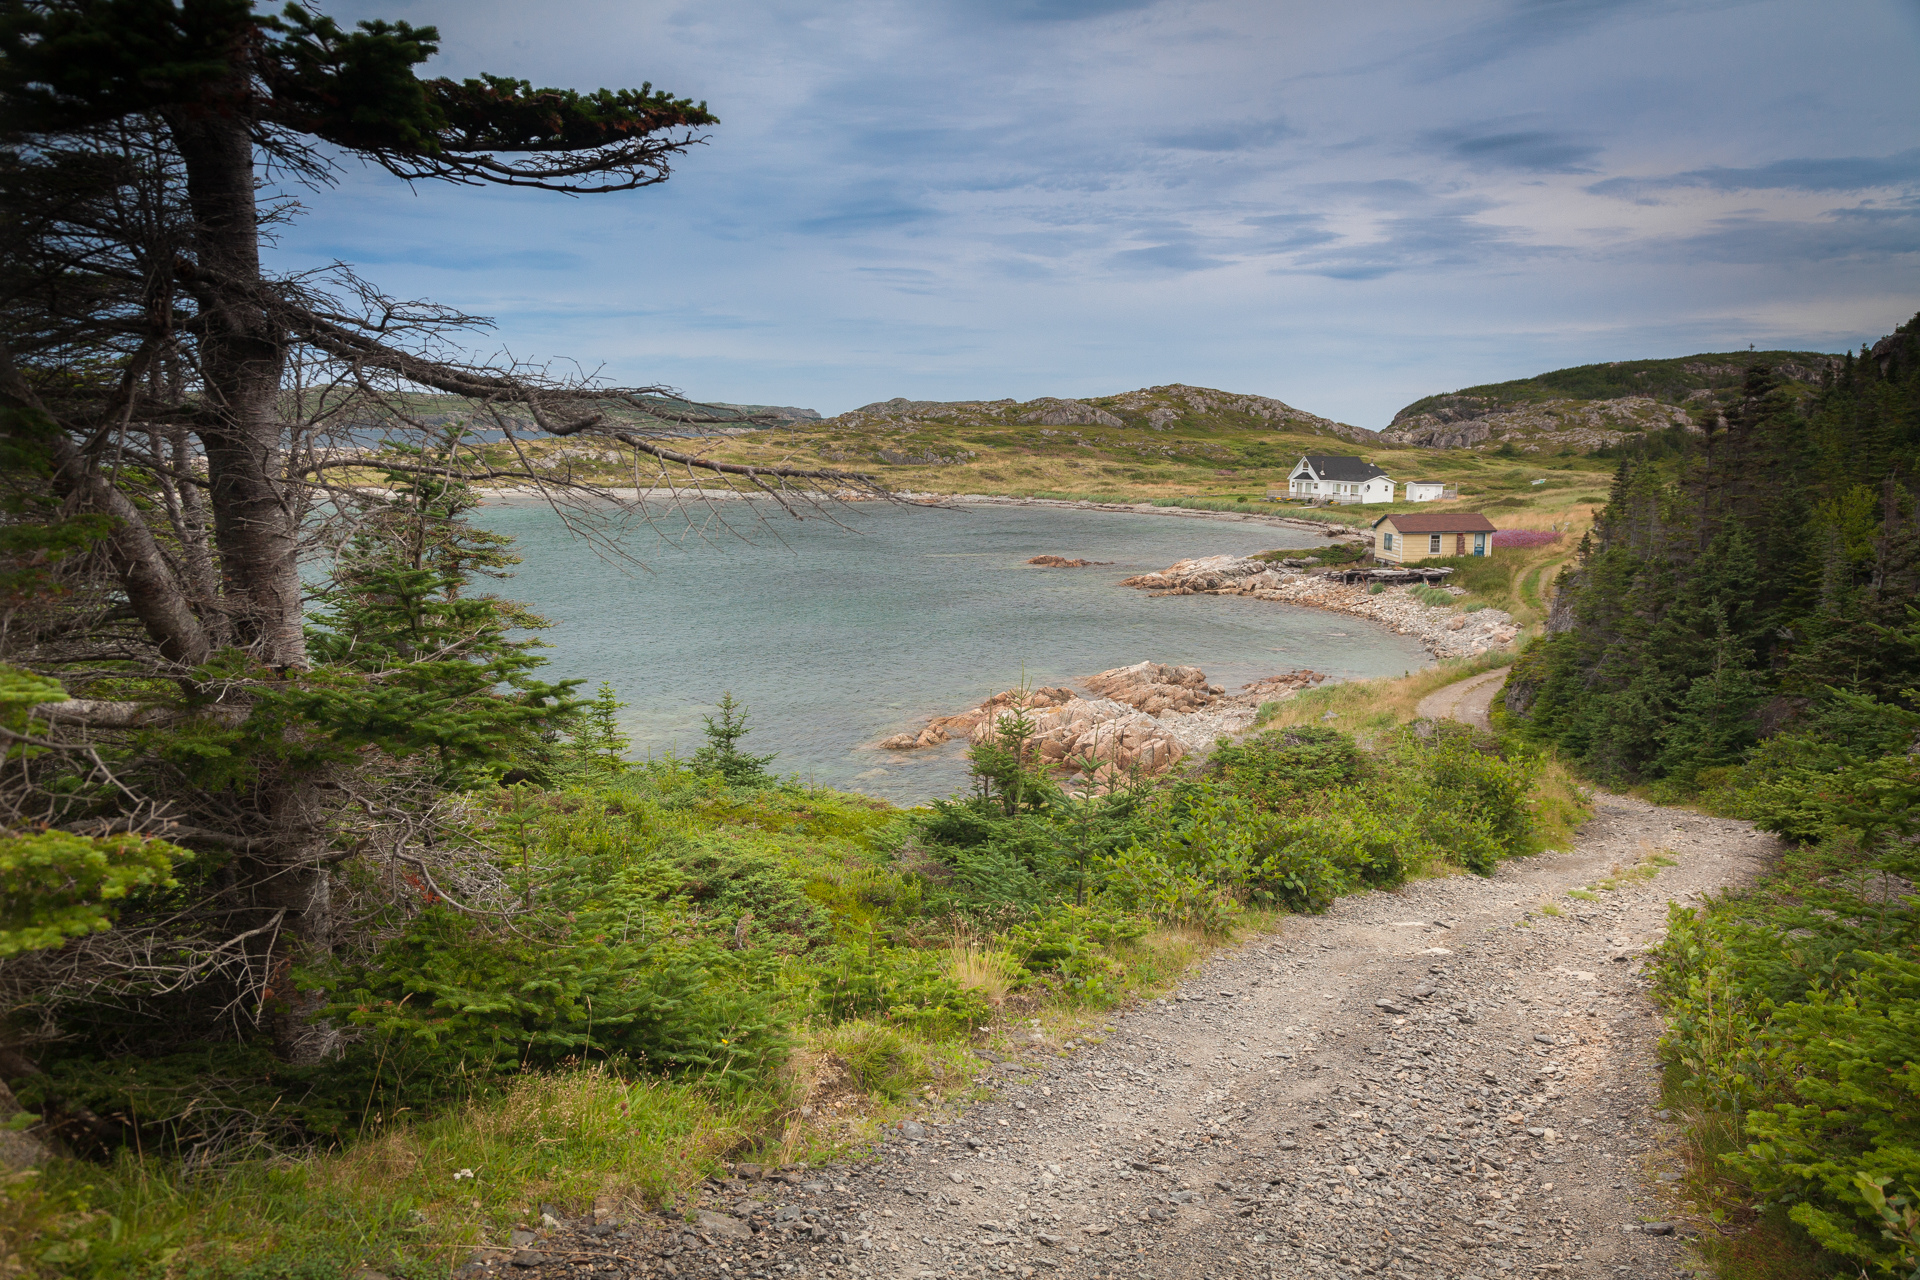 Landscapes - Newfoundland - My Way Home